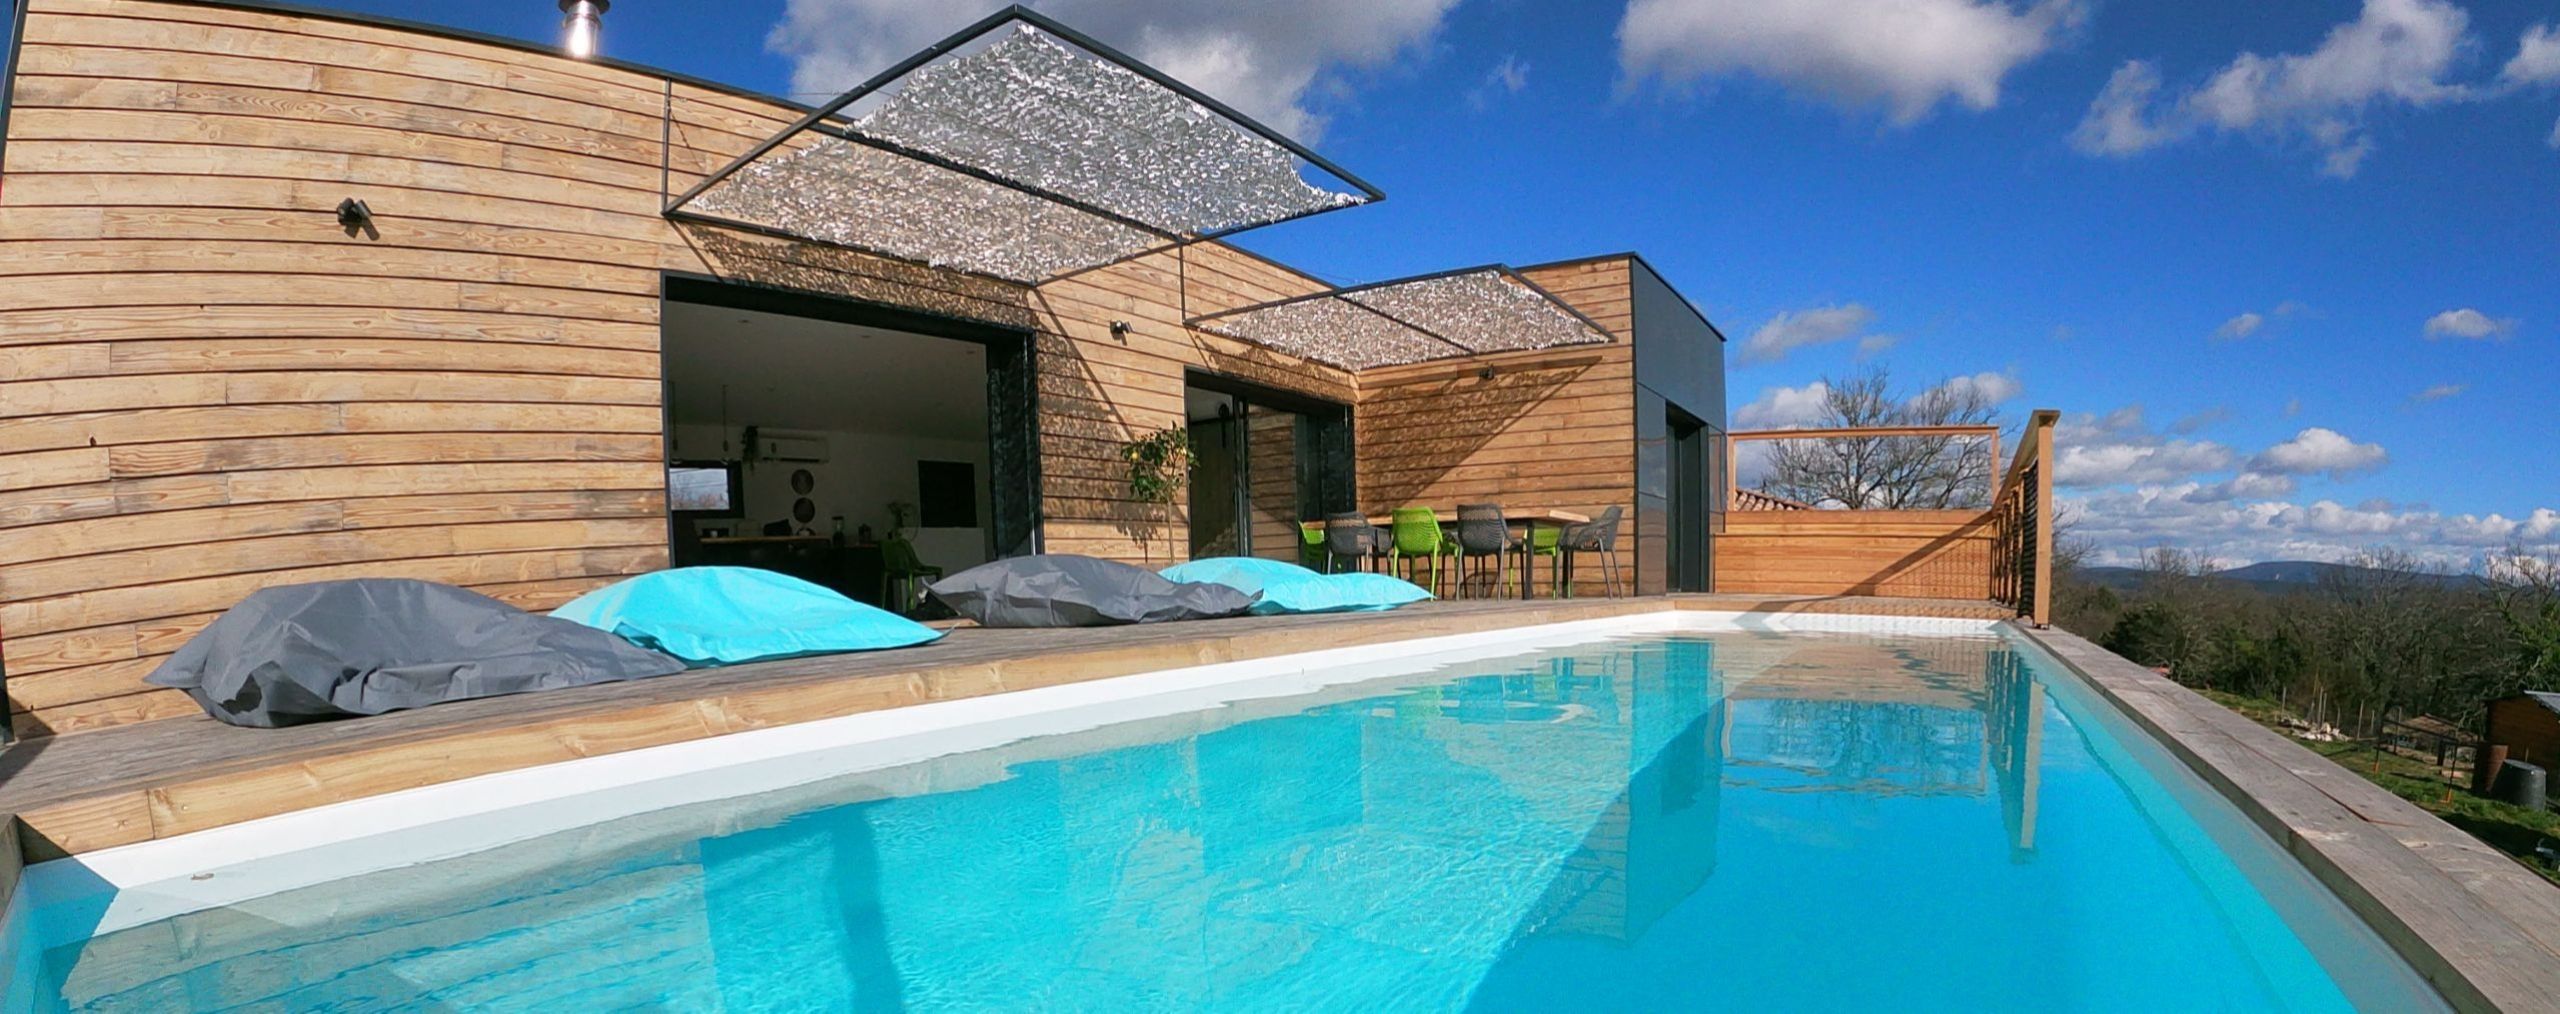 location villa ardèche piscine chauffée